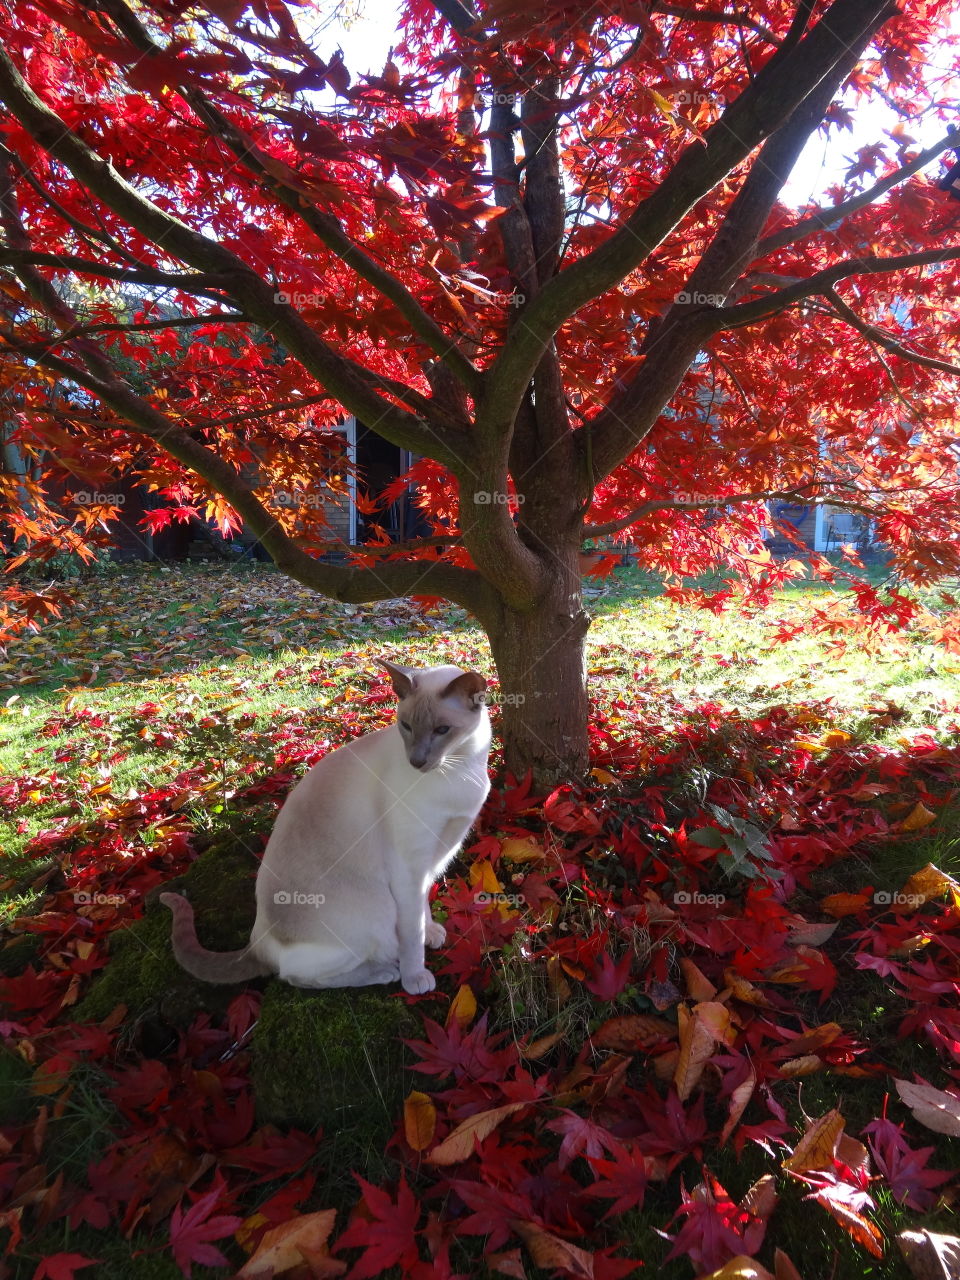 Cat under tree
